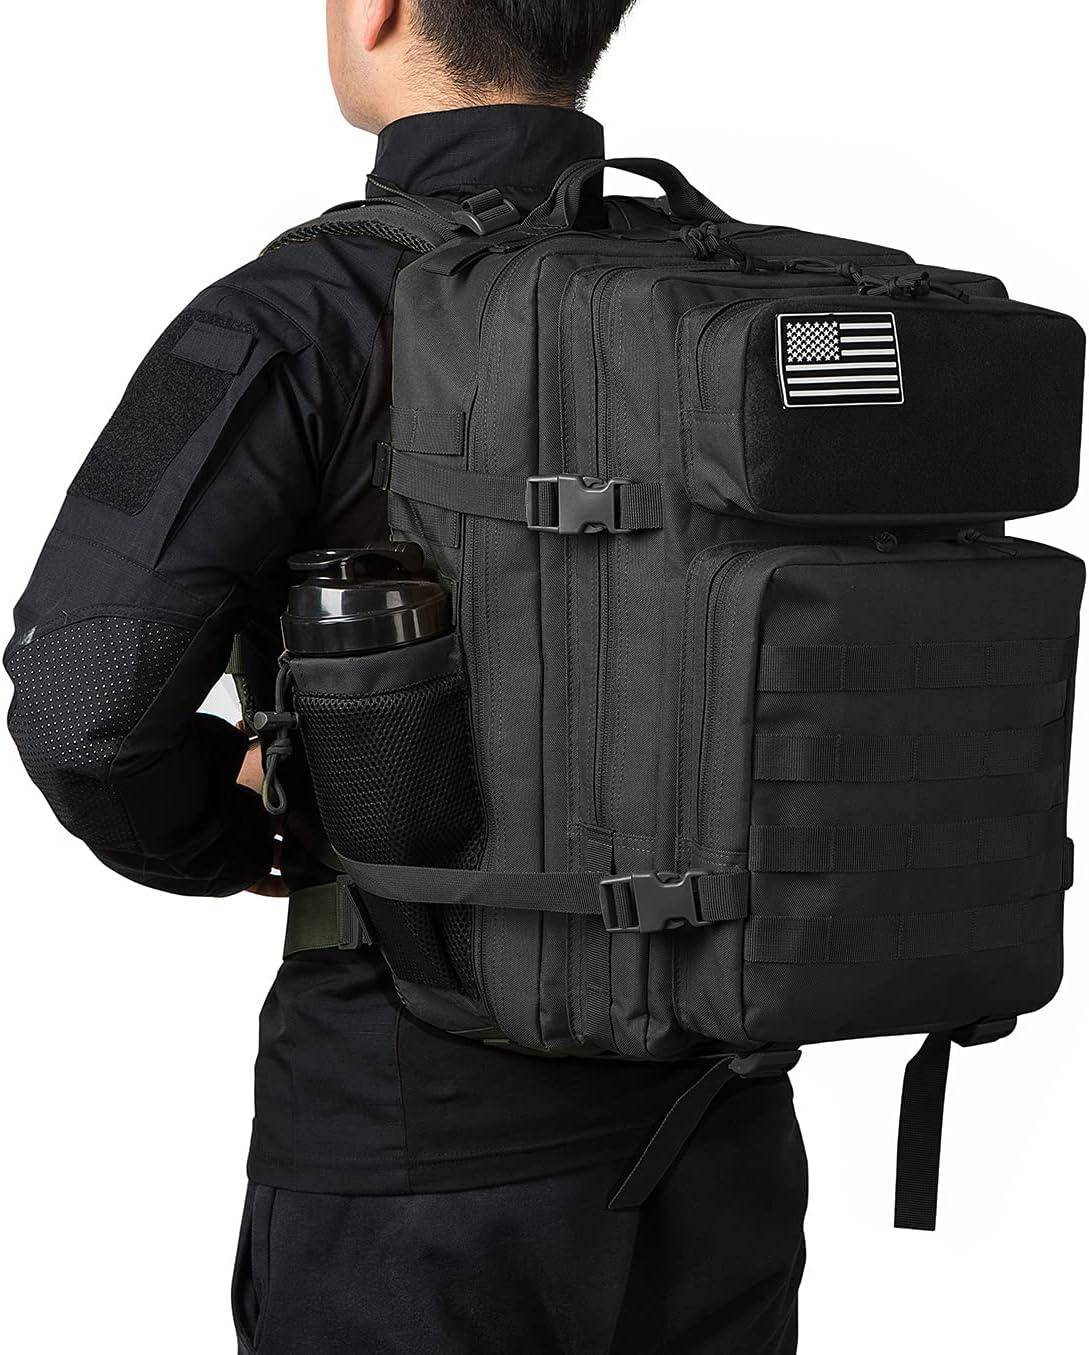 QT&QY Military Tactical Backpacks For Men Molle Daypack 35L/45L Large 3 Day  Bug Out Bag Hiking Rucksack With Bottle Holder